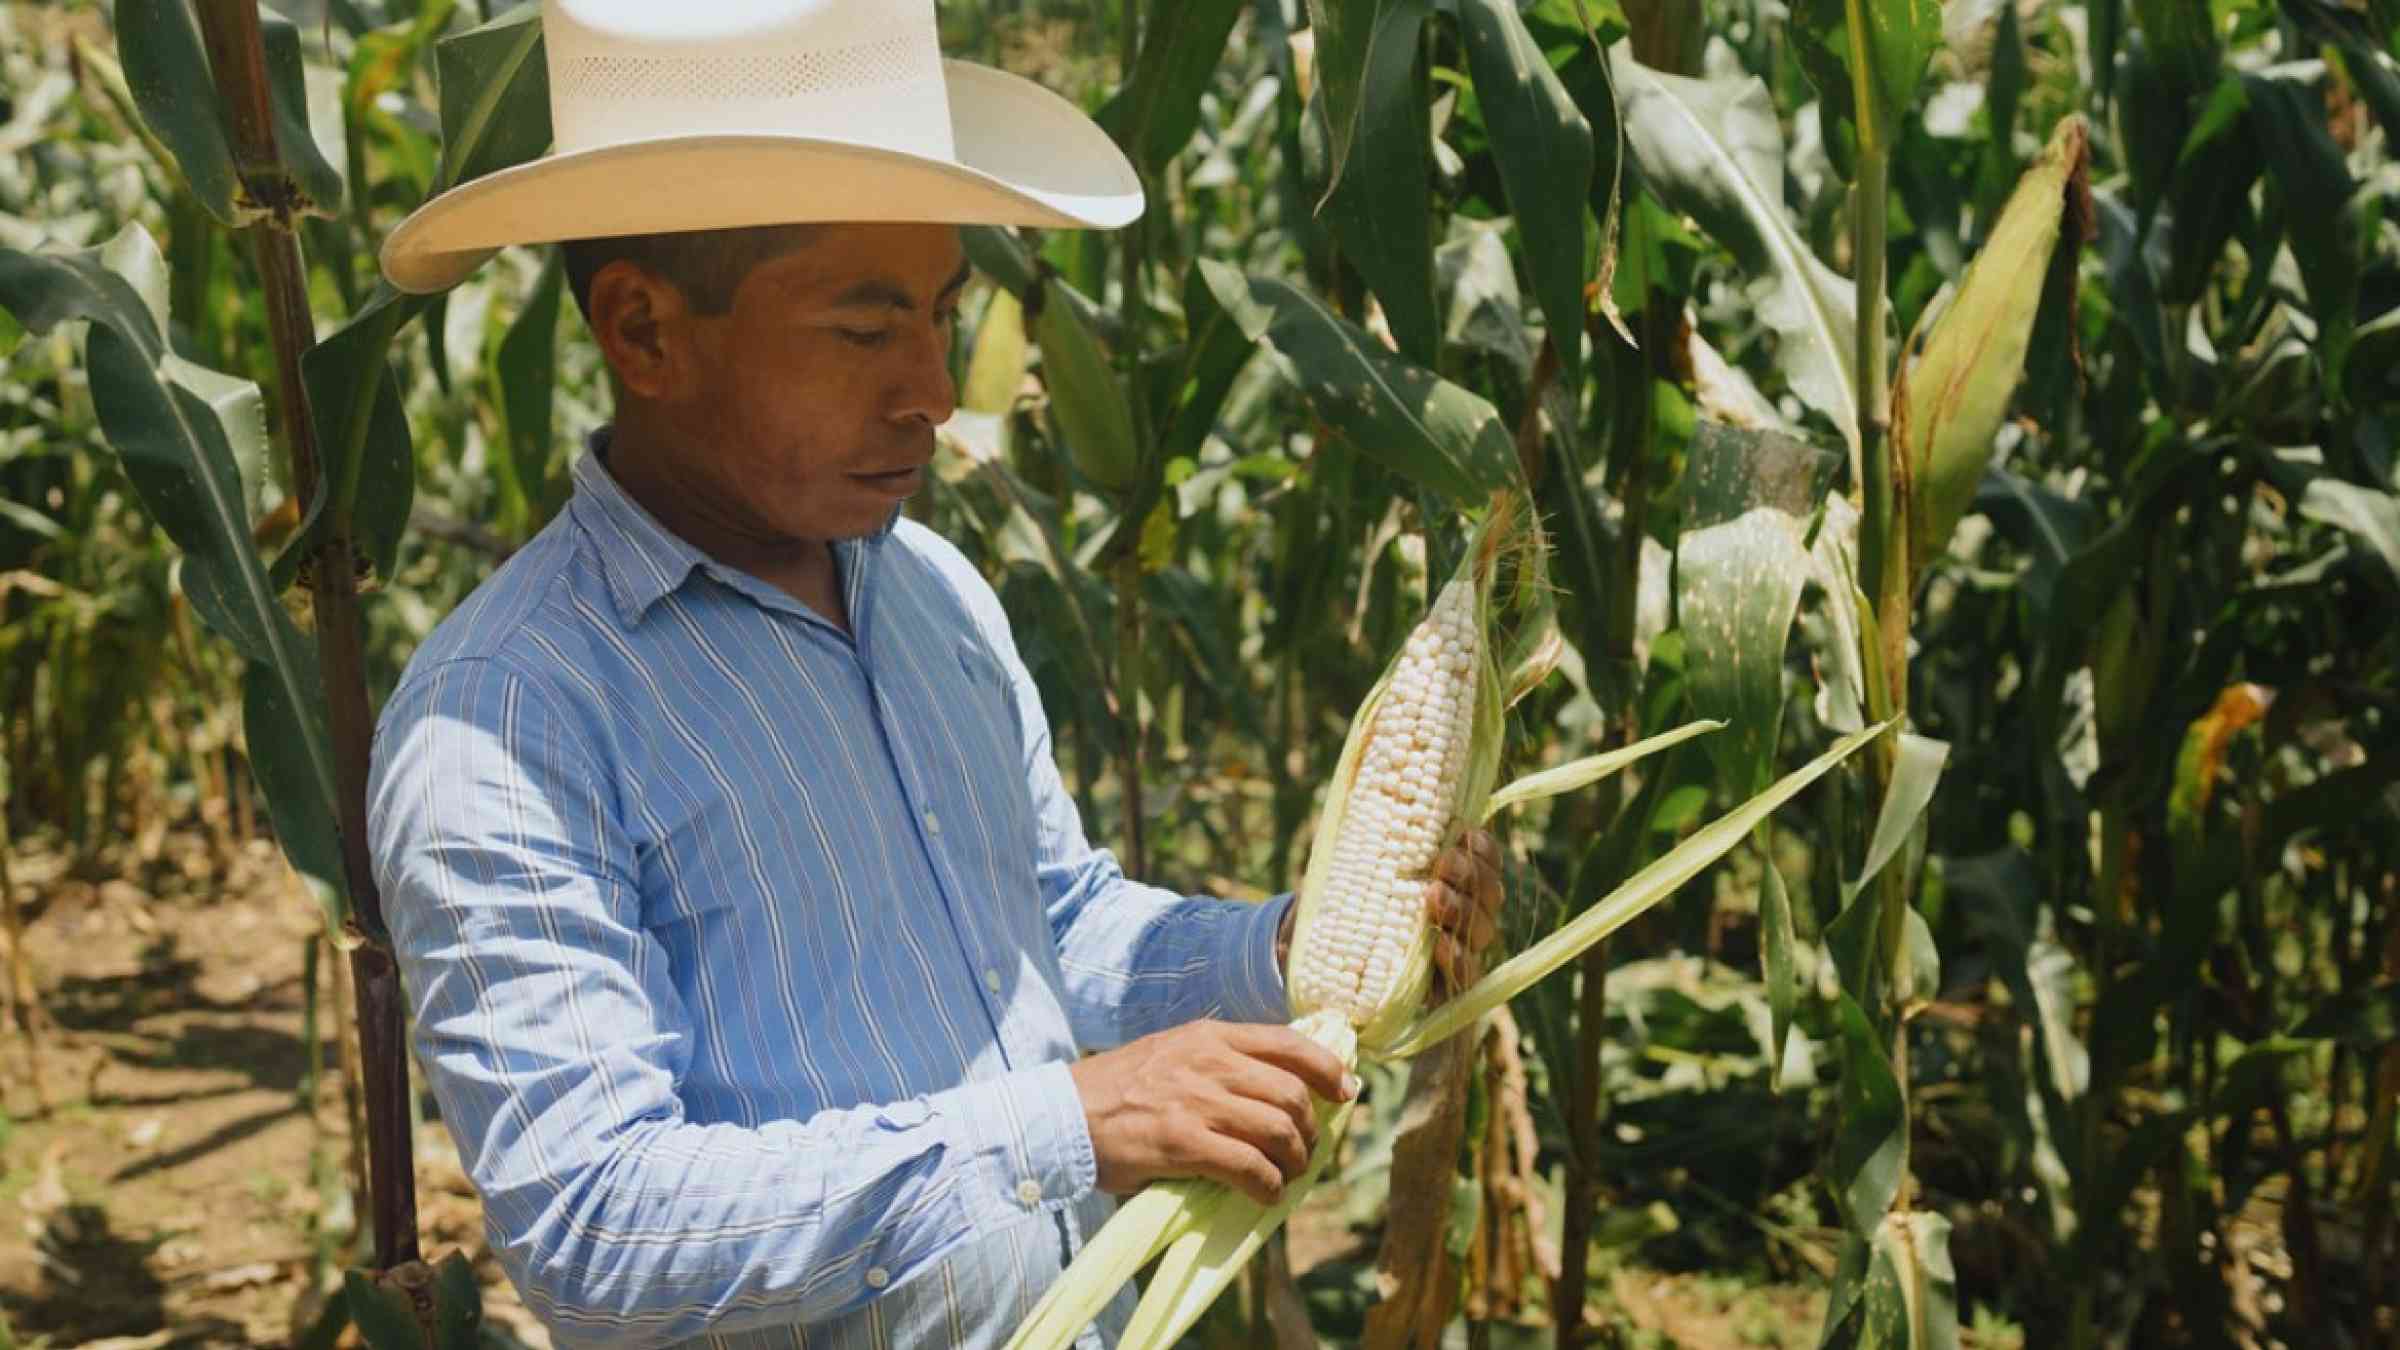 A farmer tends to his maize crop in Talquezal, Guatemala